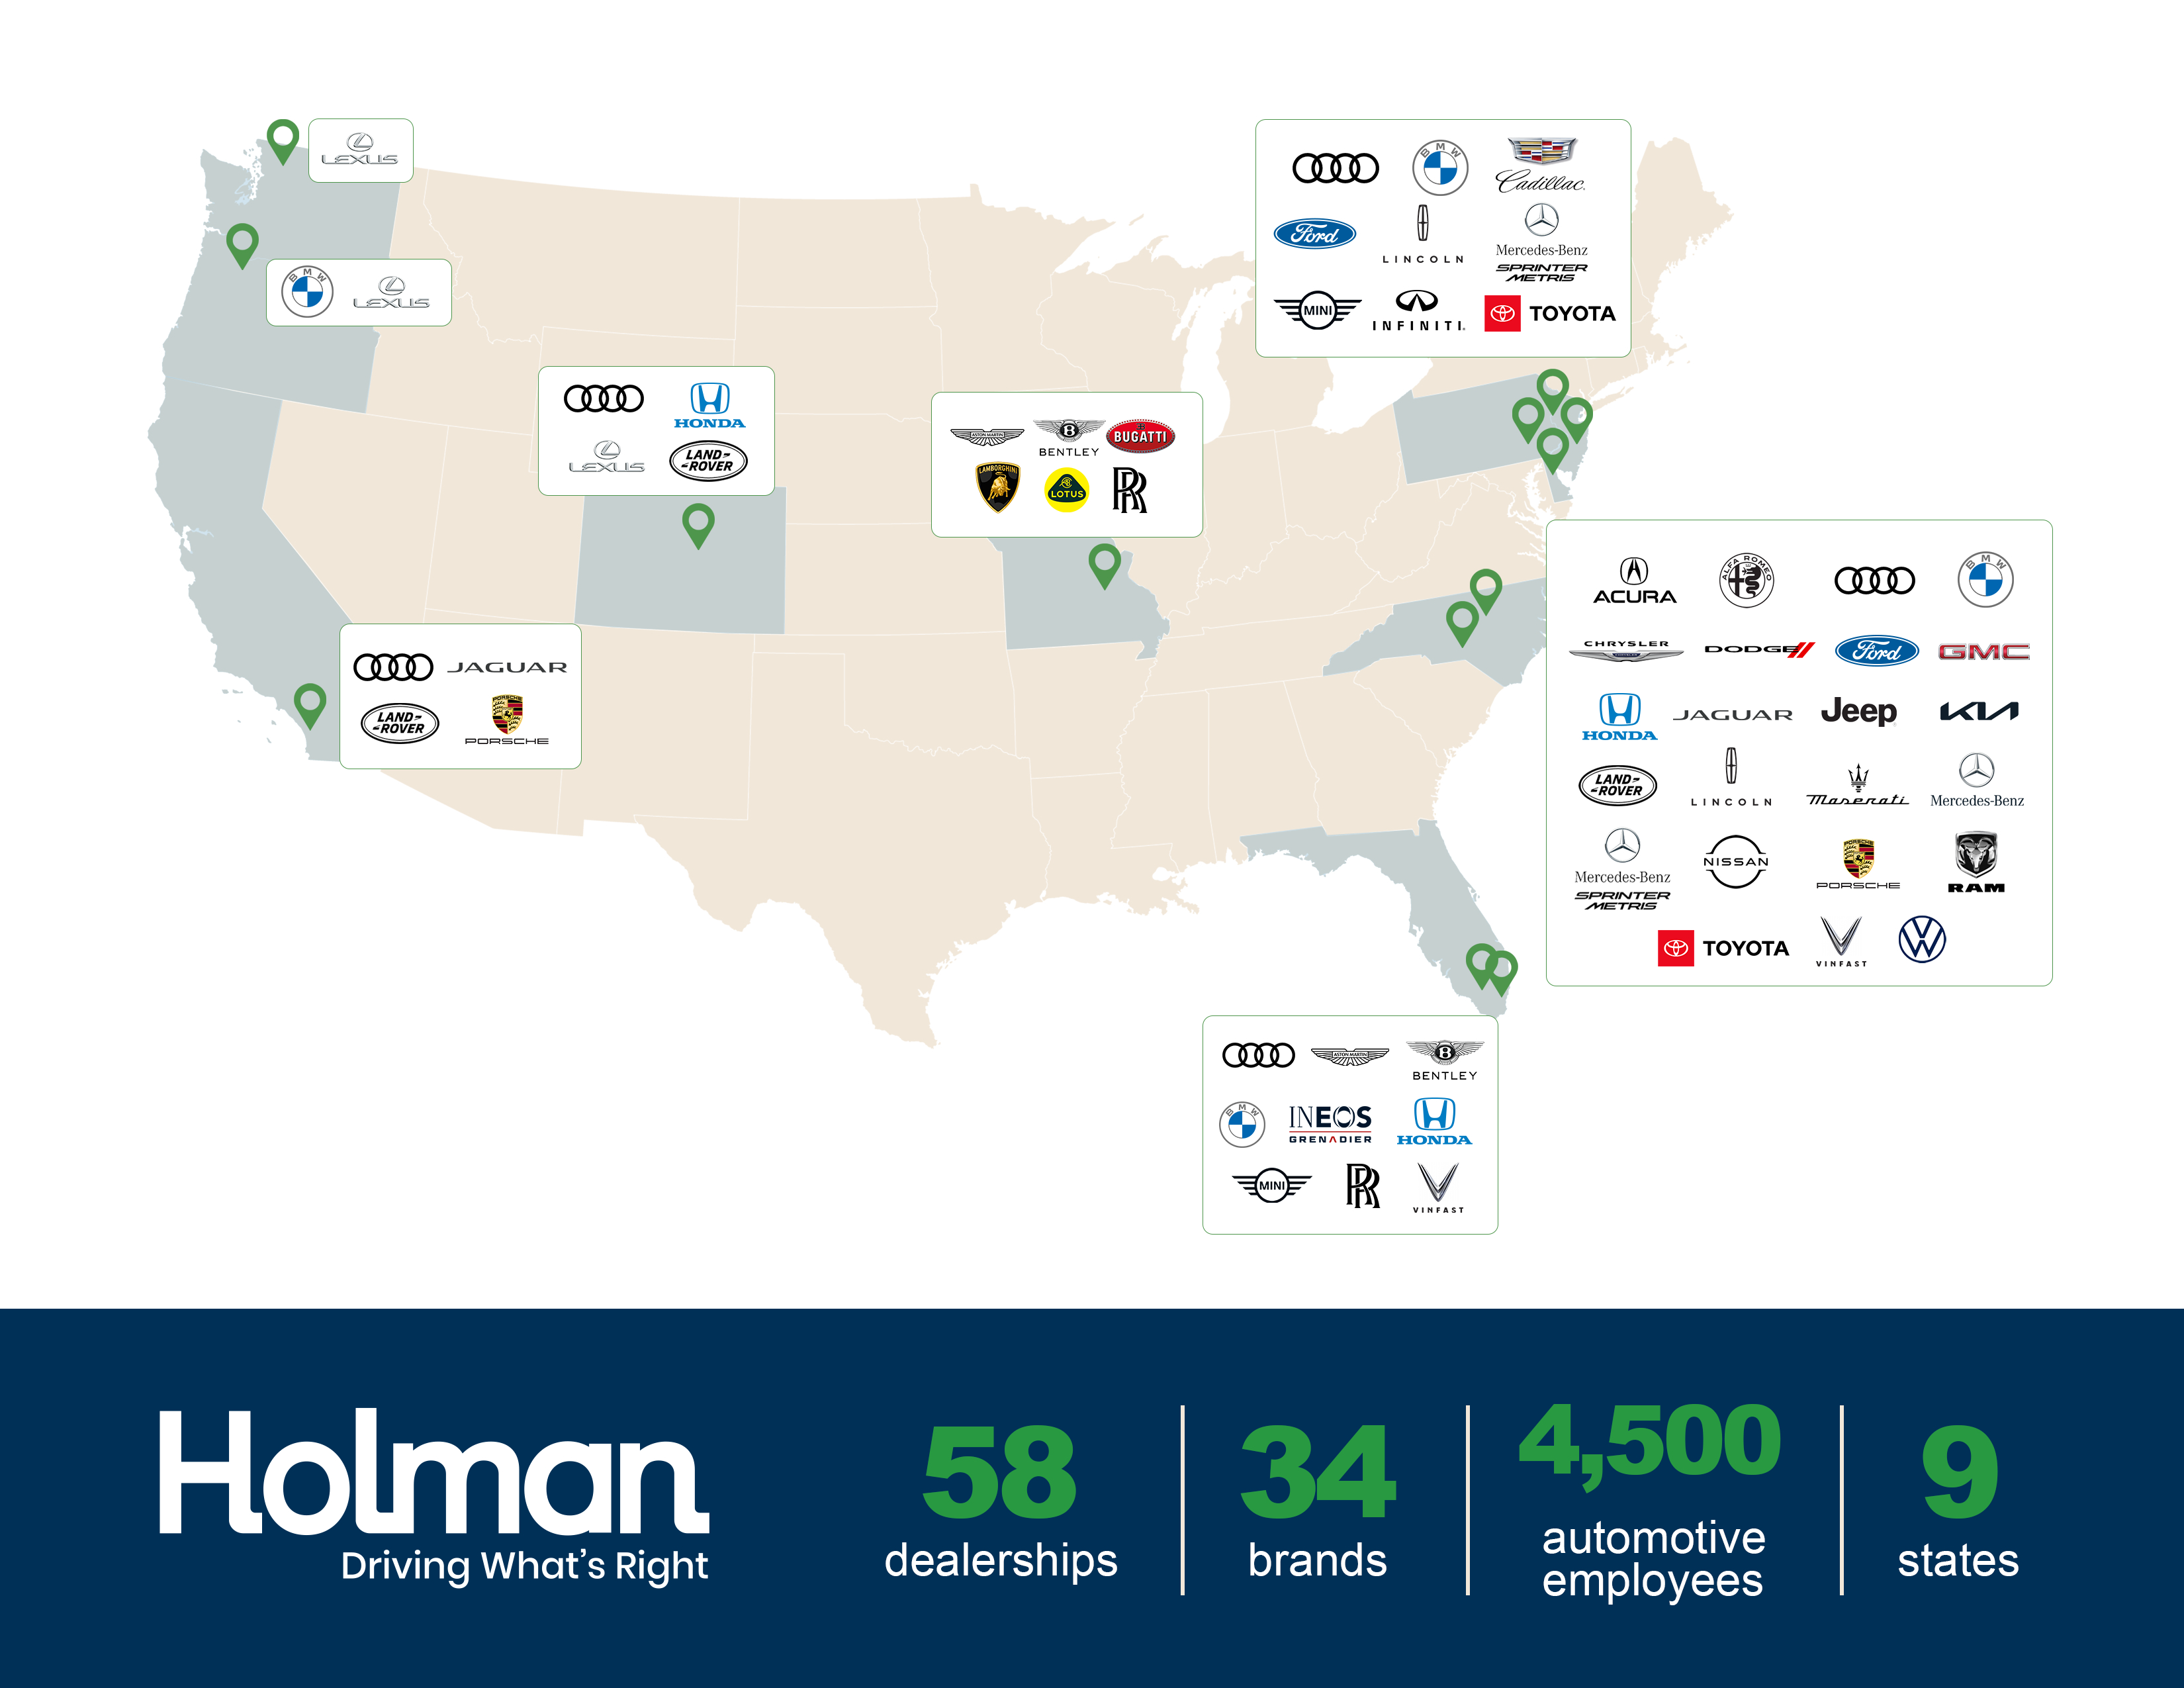 Holman's Retail Automotive Presence